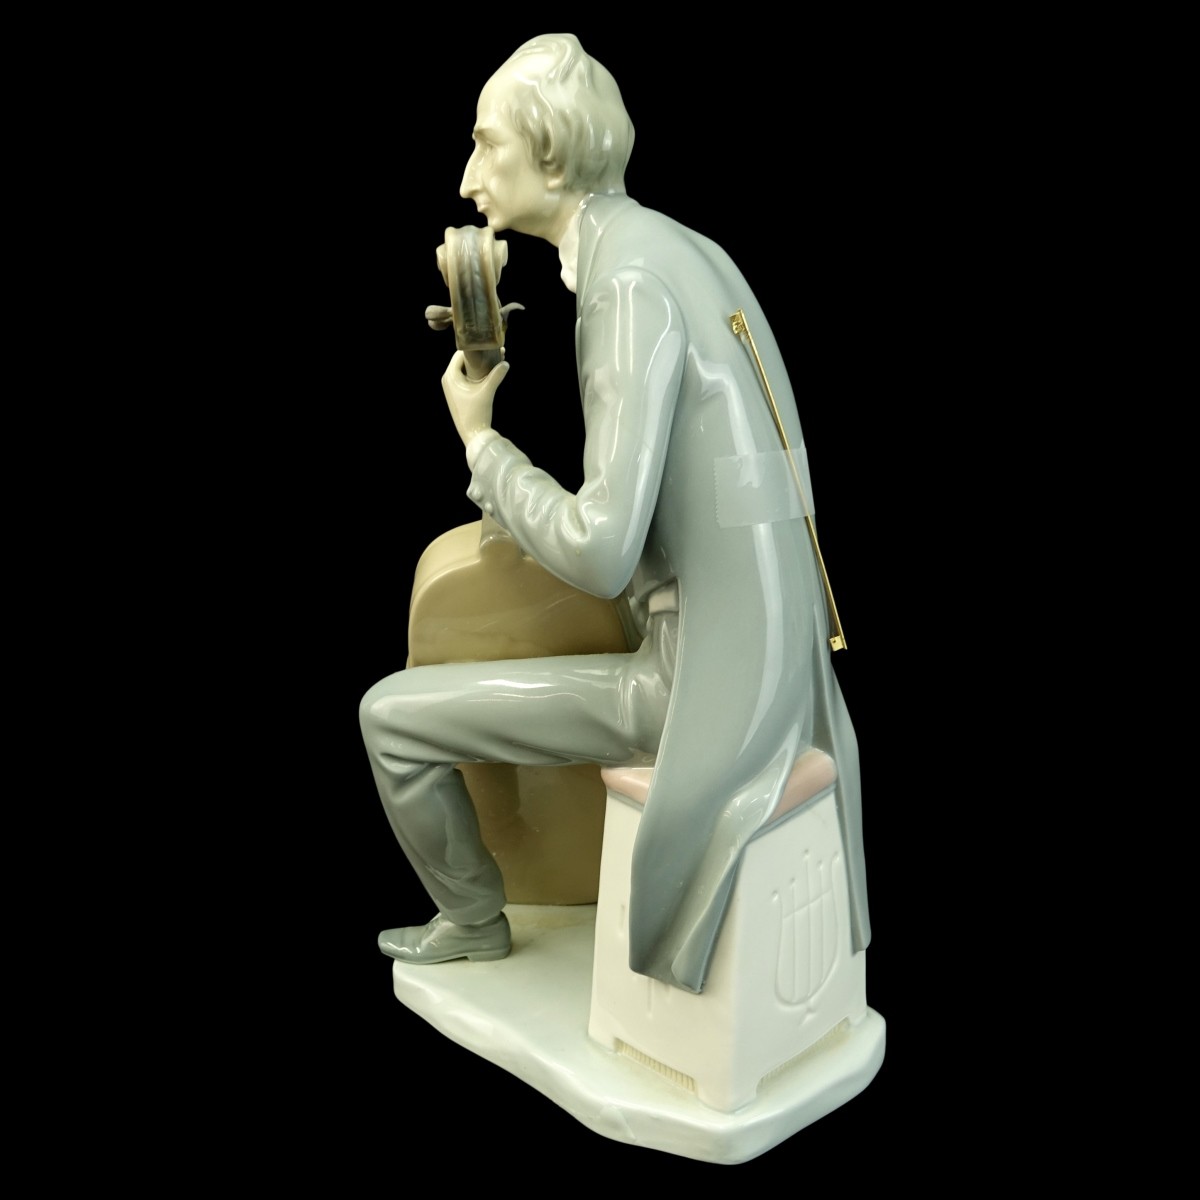 Lladro "Cellist" Glazed Porcelain Figurine